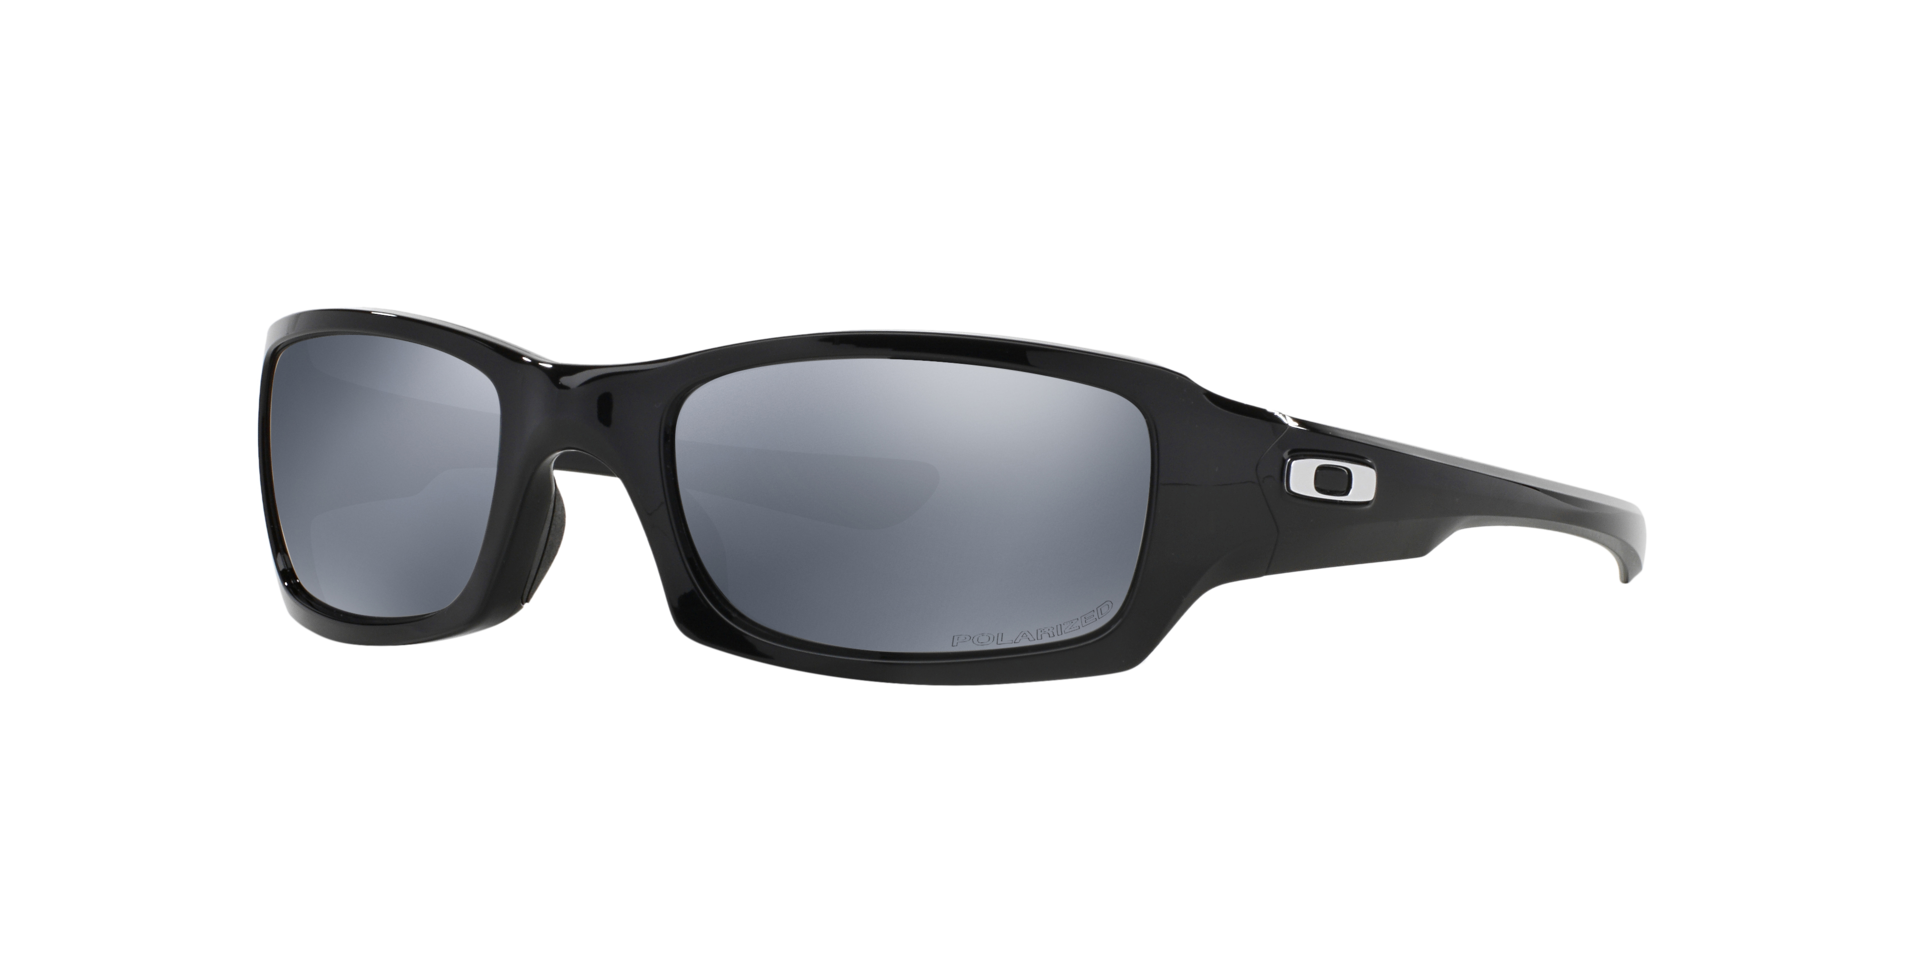 Oakley OO9238 fives squared men's sunglasses